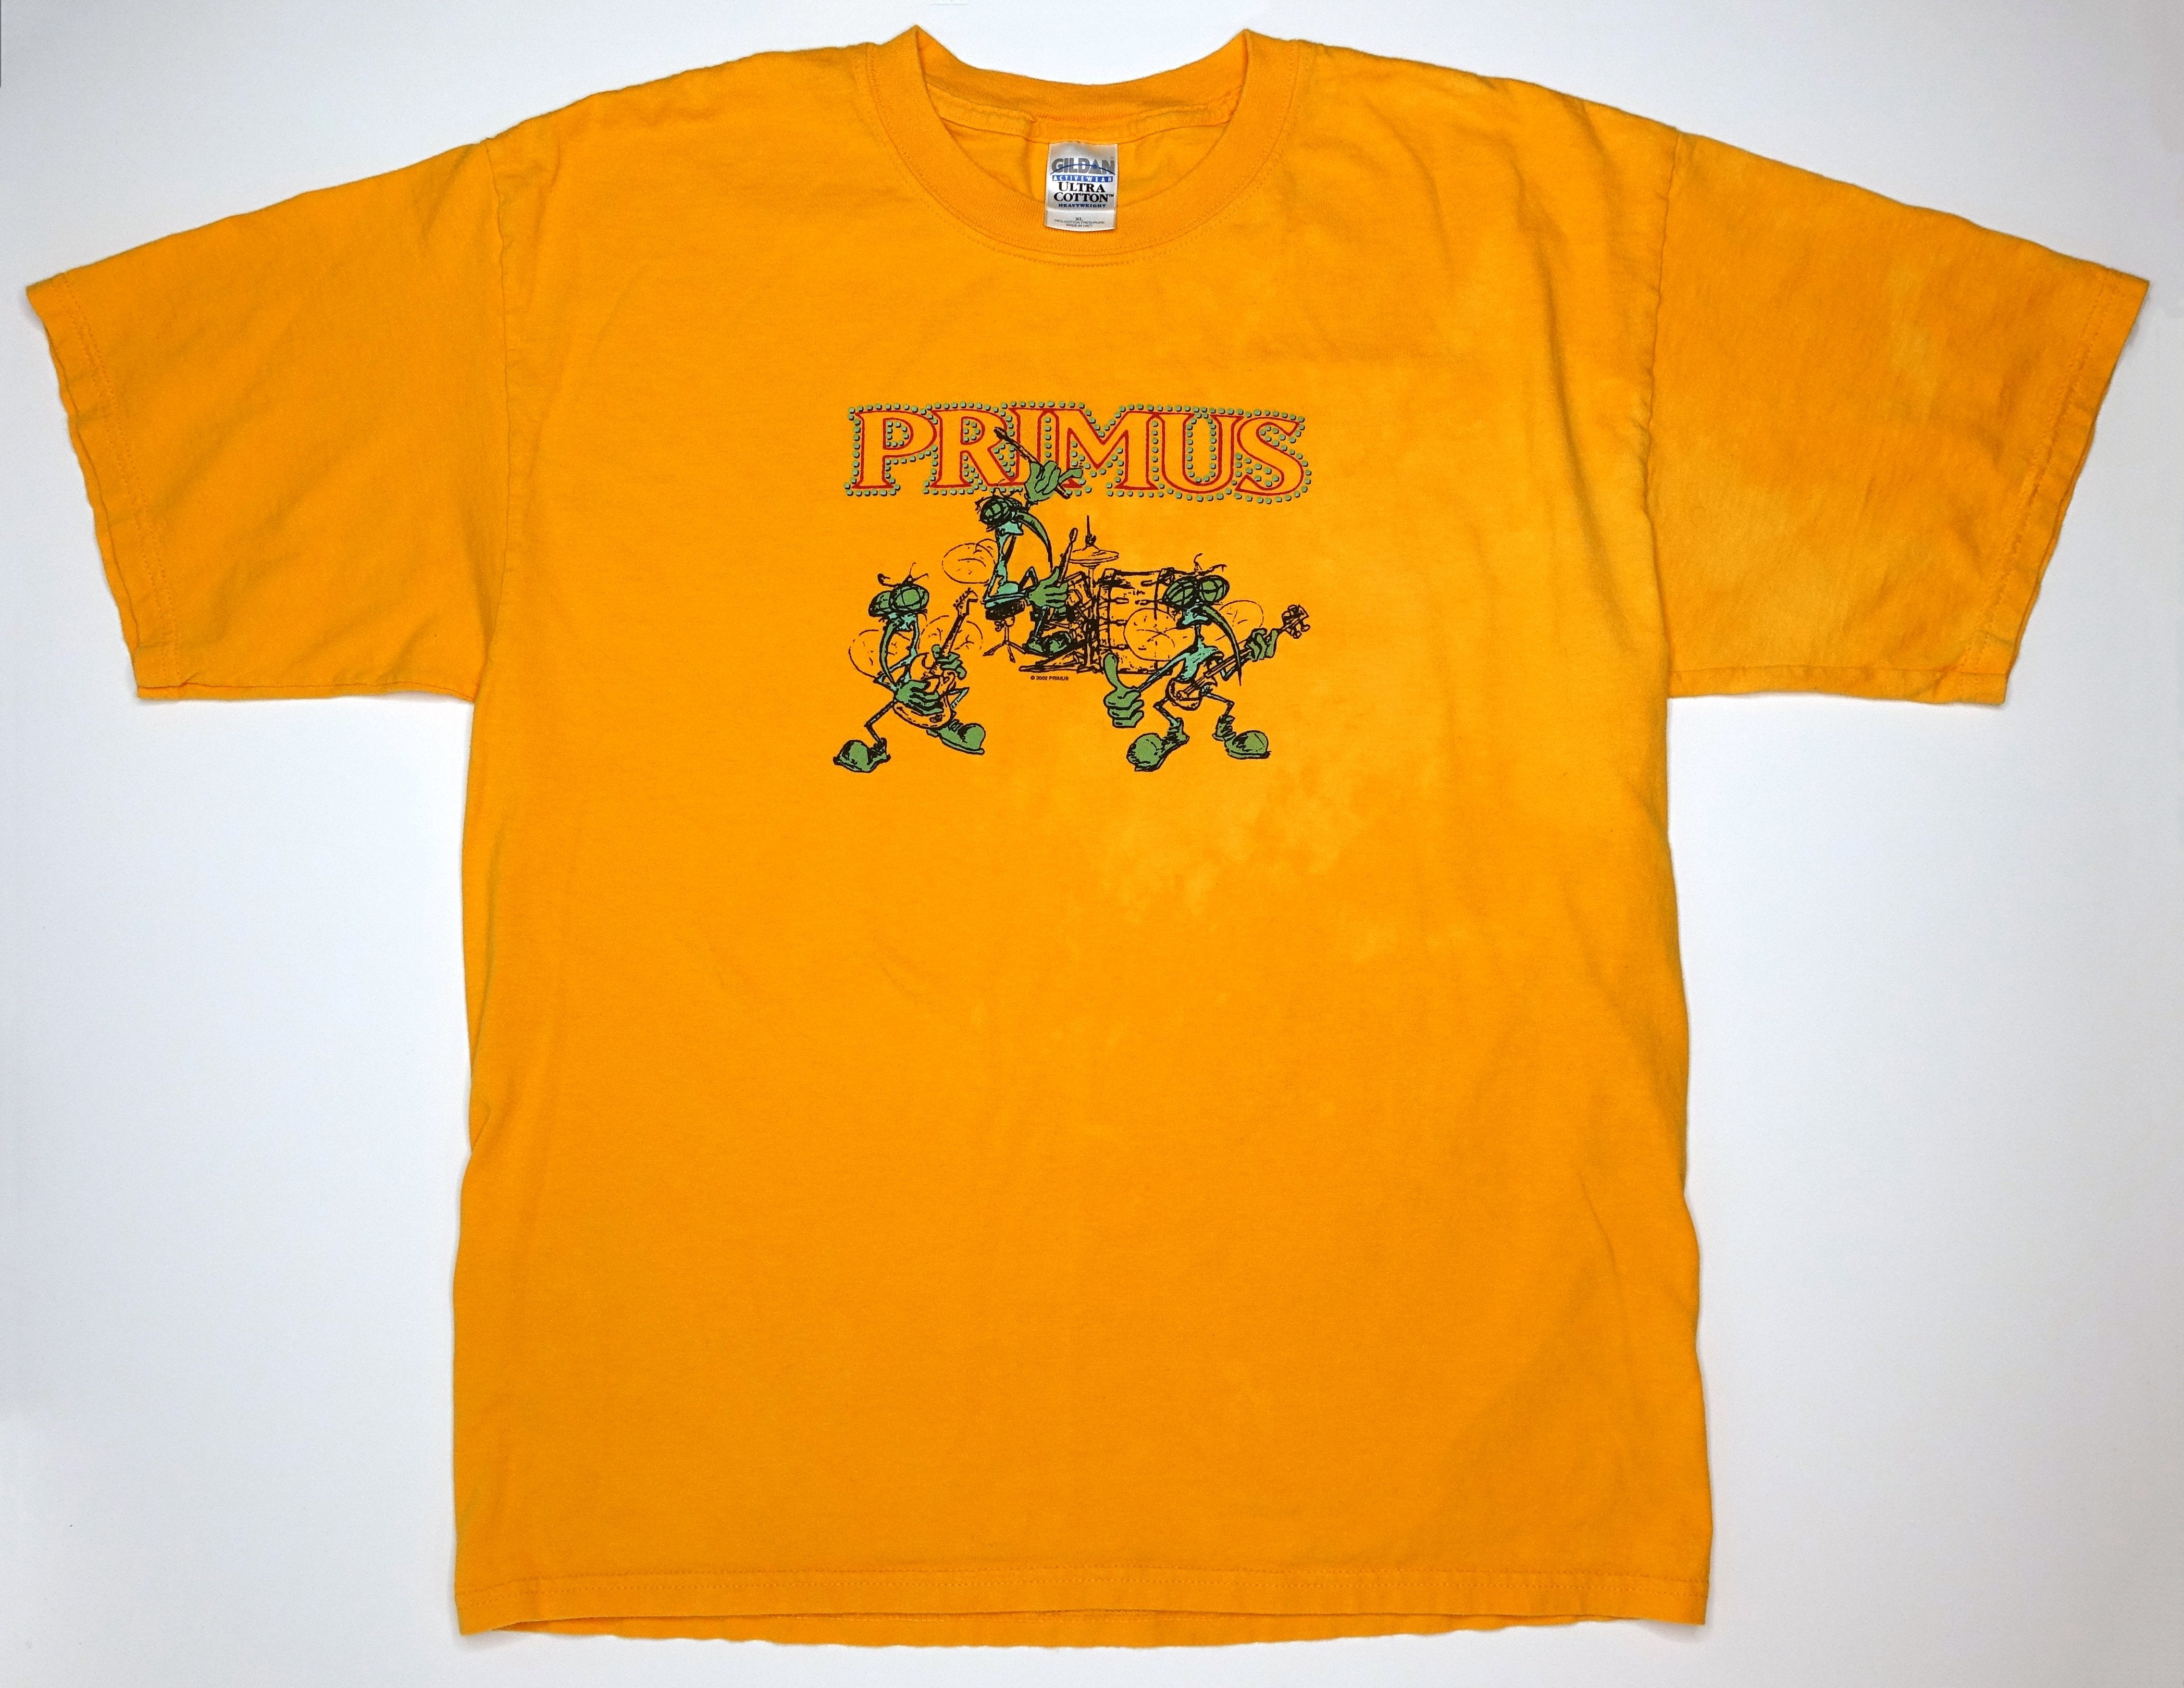 Primus - Mosquito Band 2002 Tour Shirt Size XL